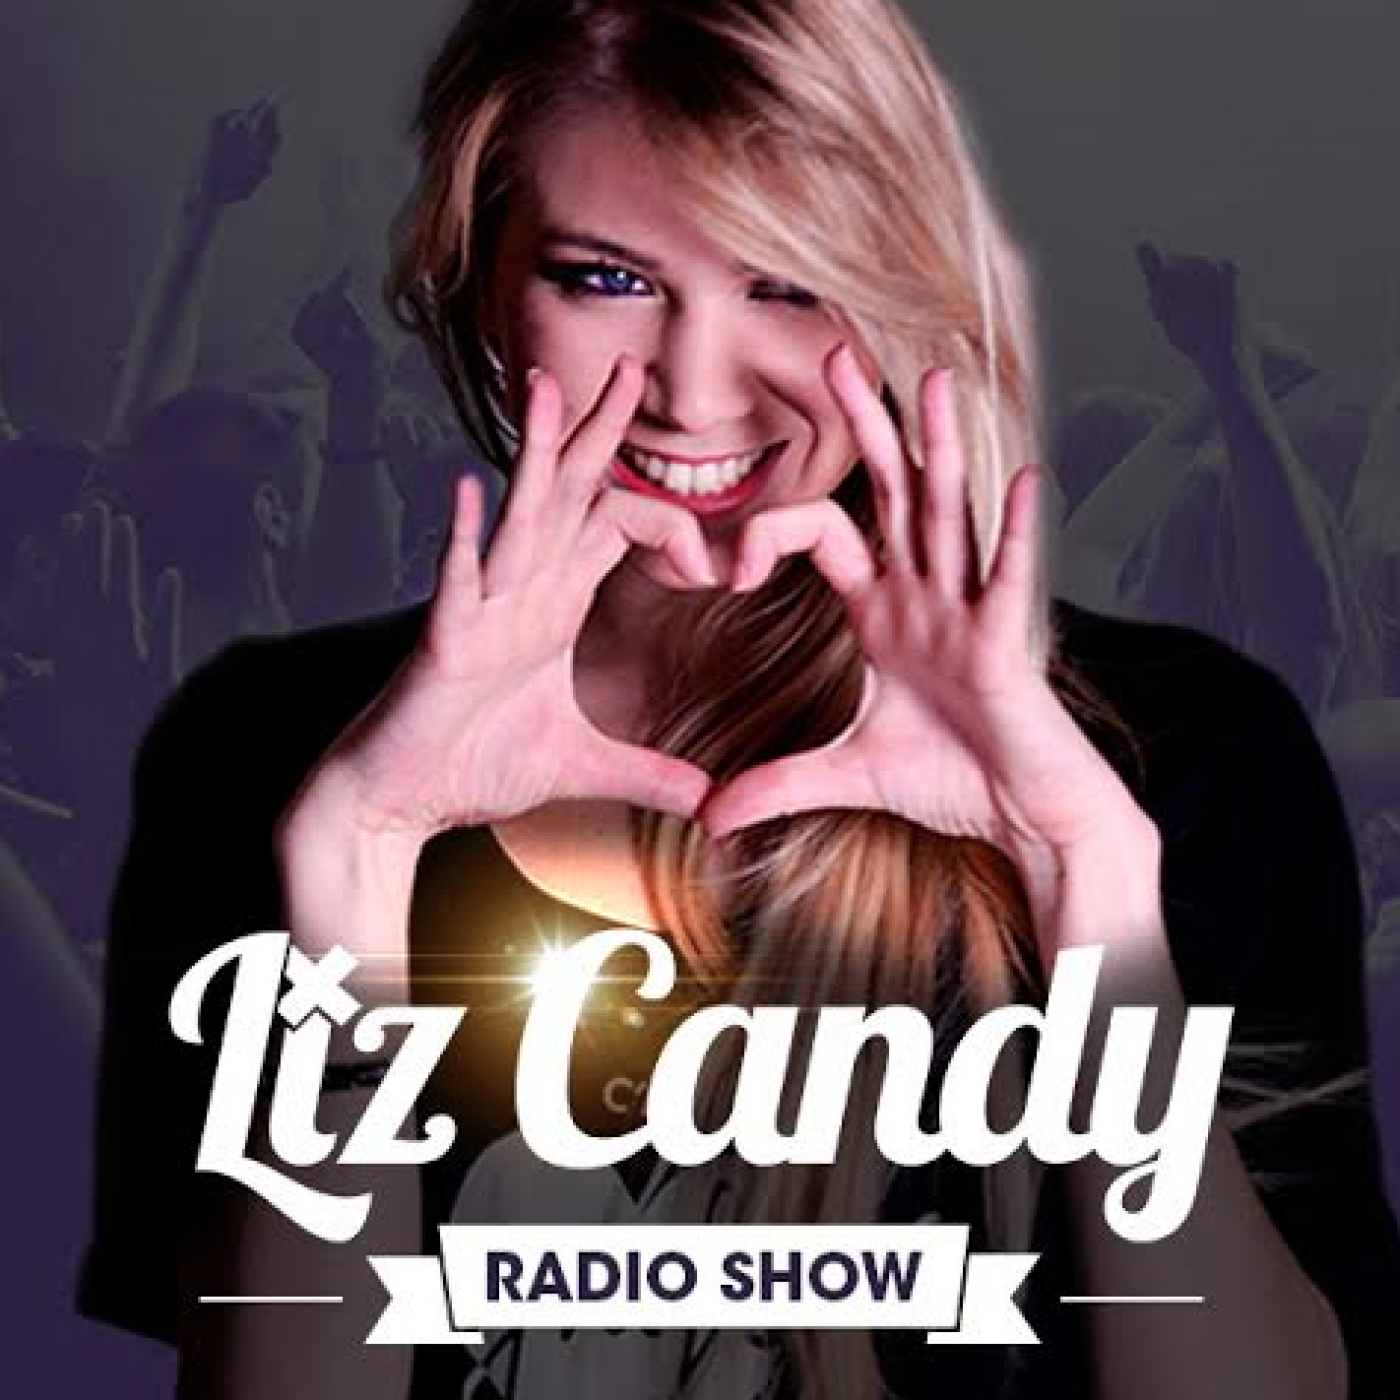 Liz Candy's Radio Show